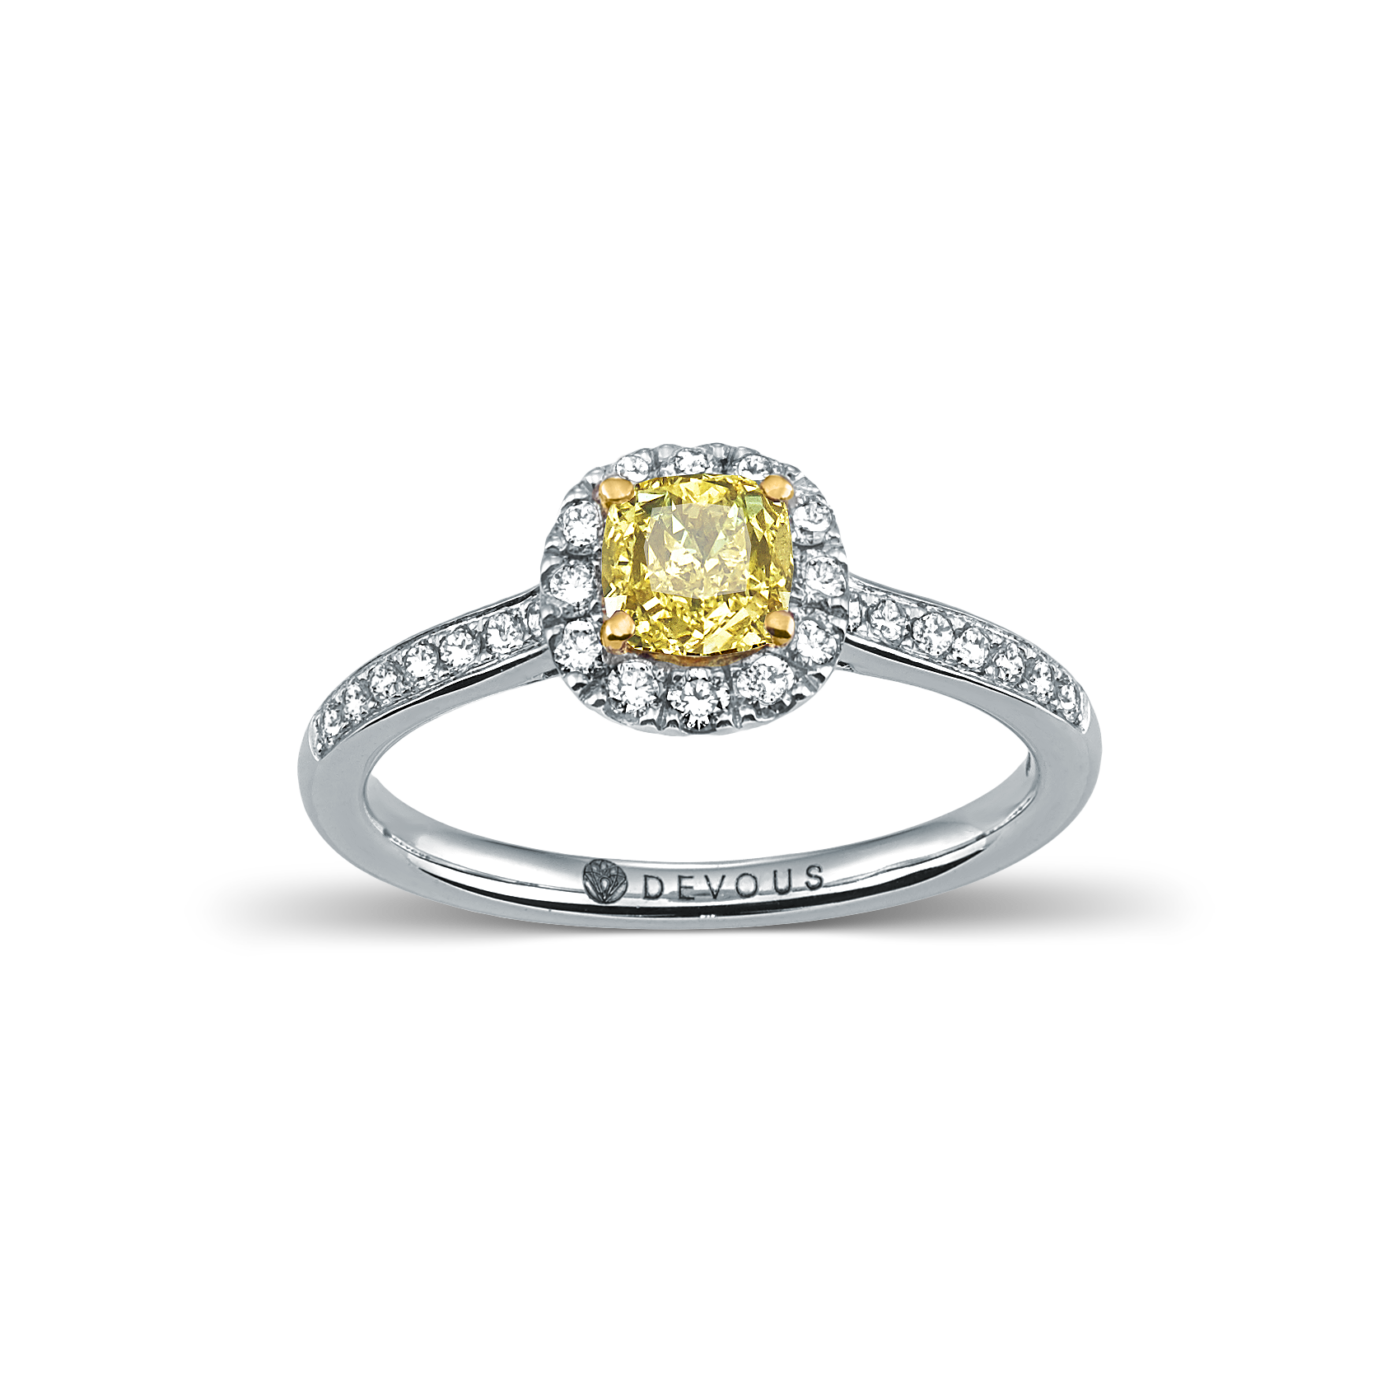 Devous Fancy Yellow Diamond Ring